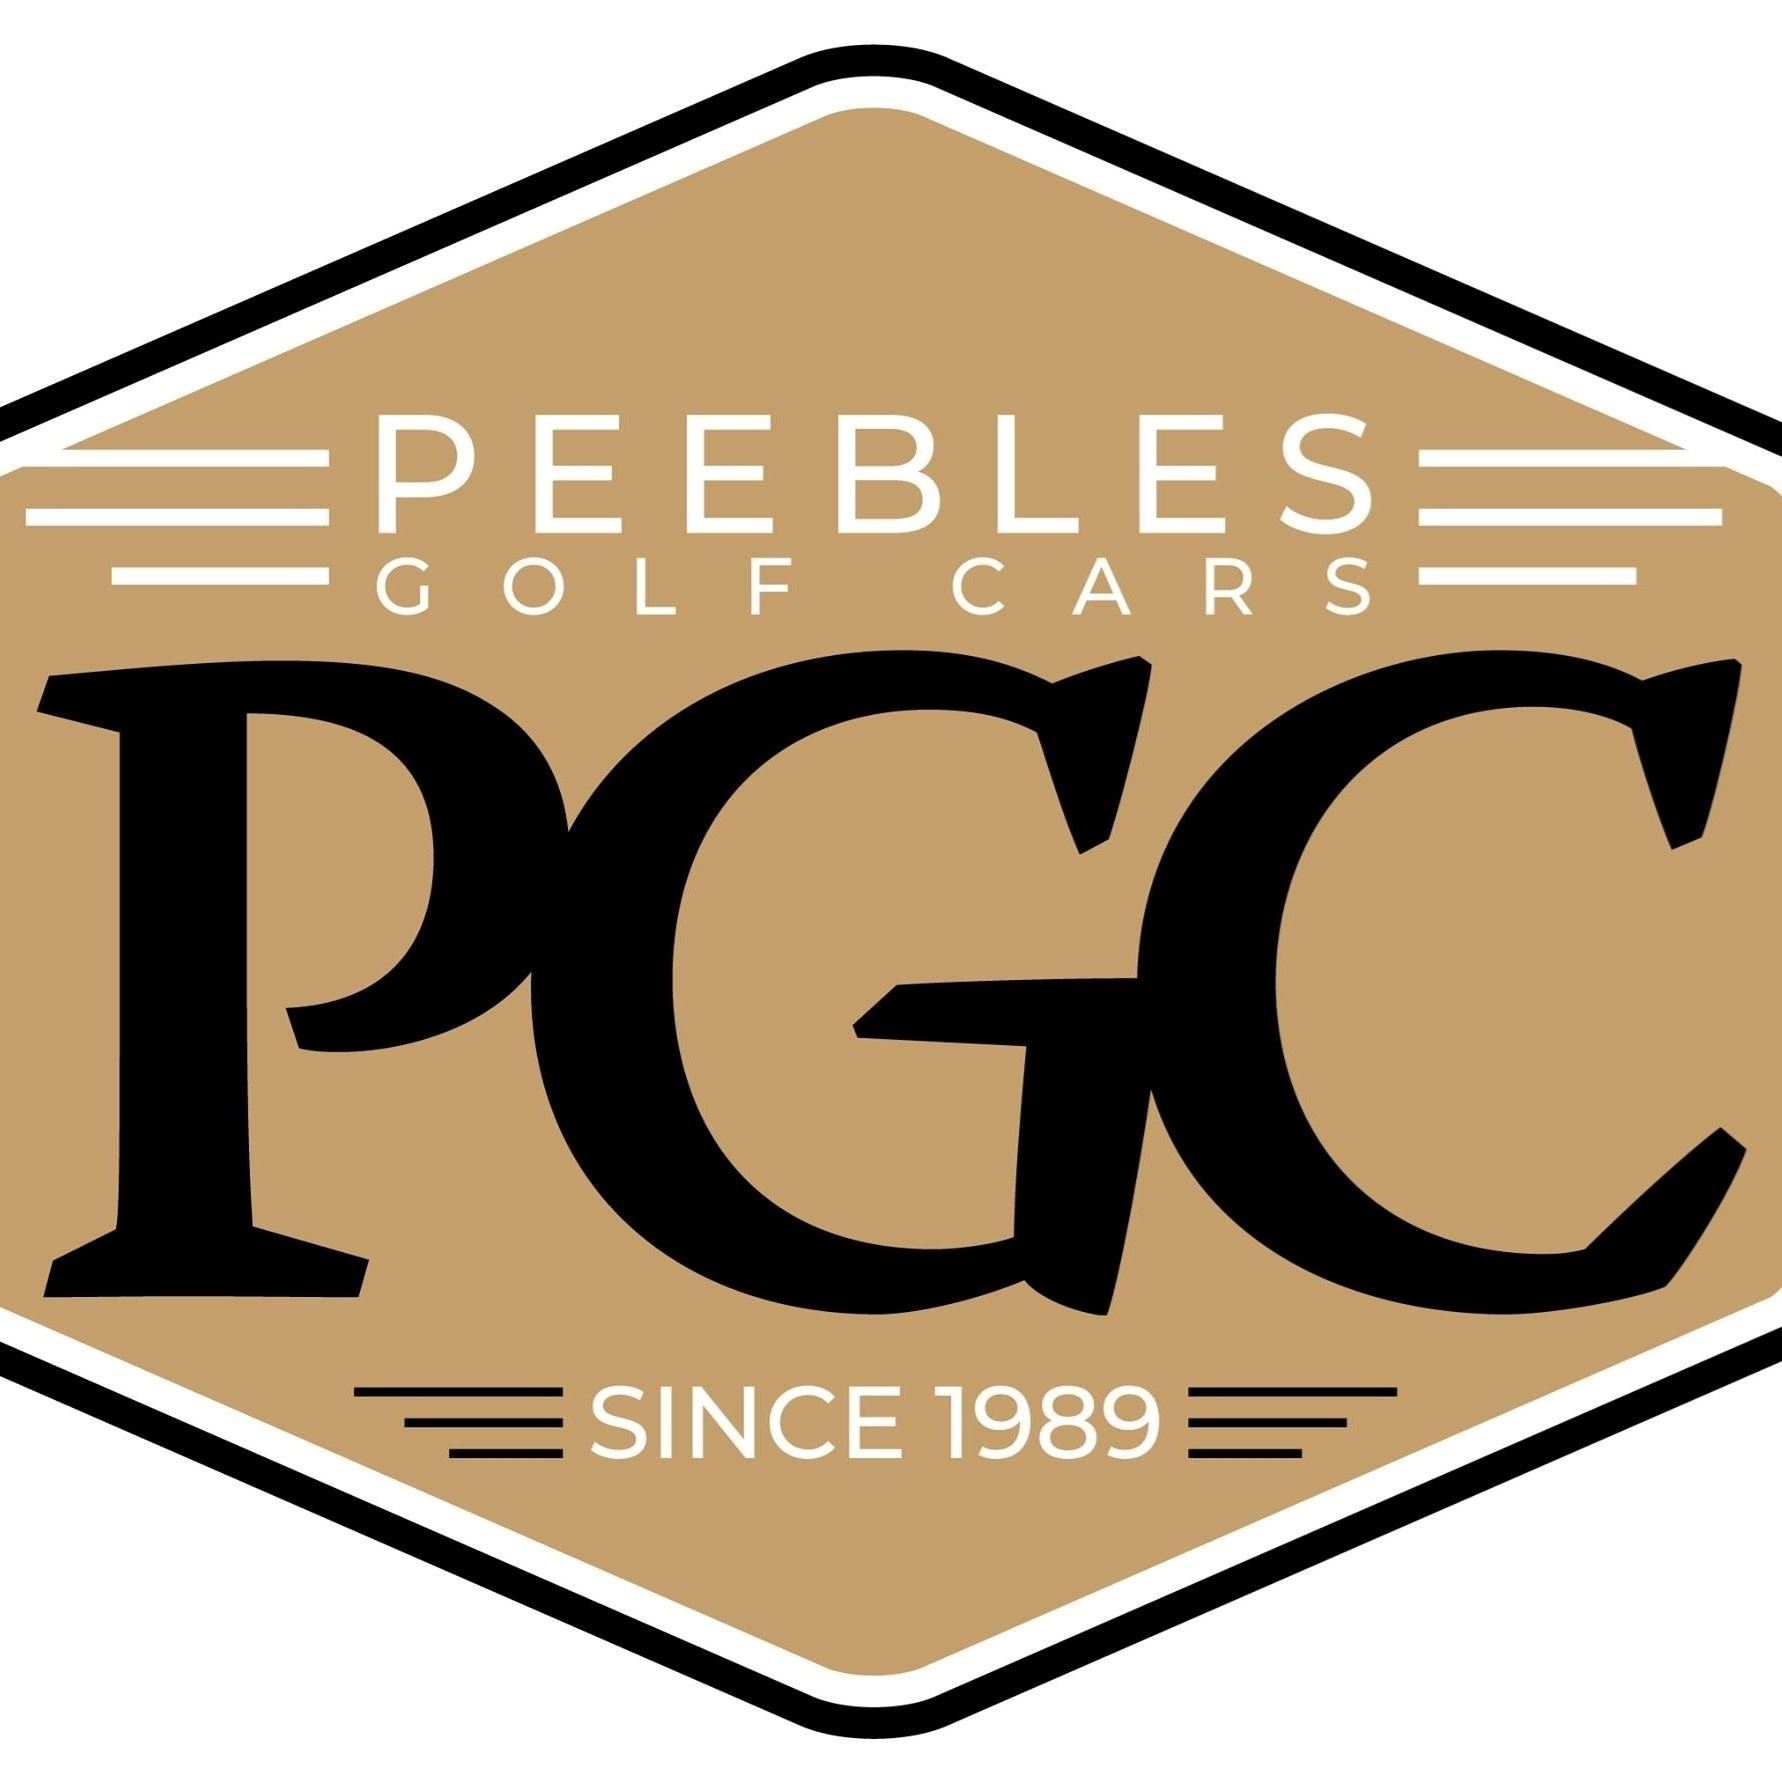 Peebles Golf Cars